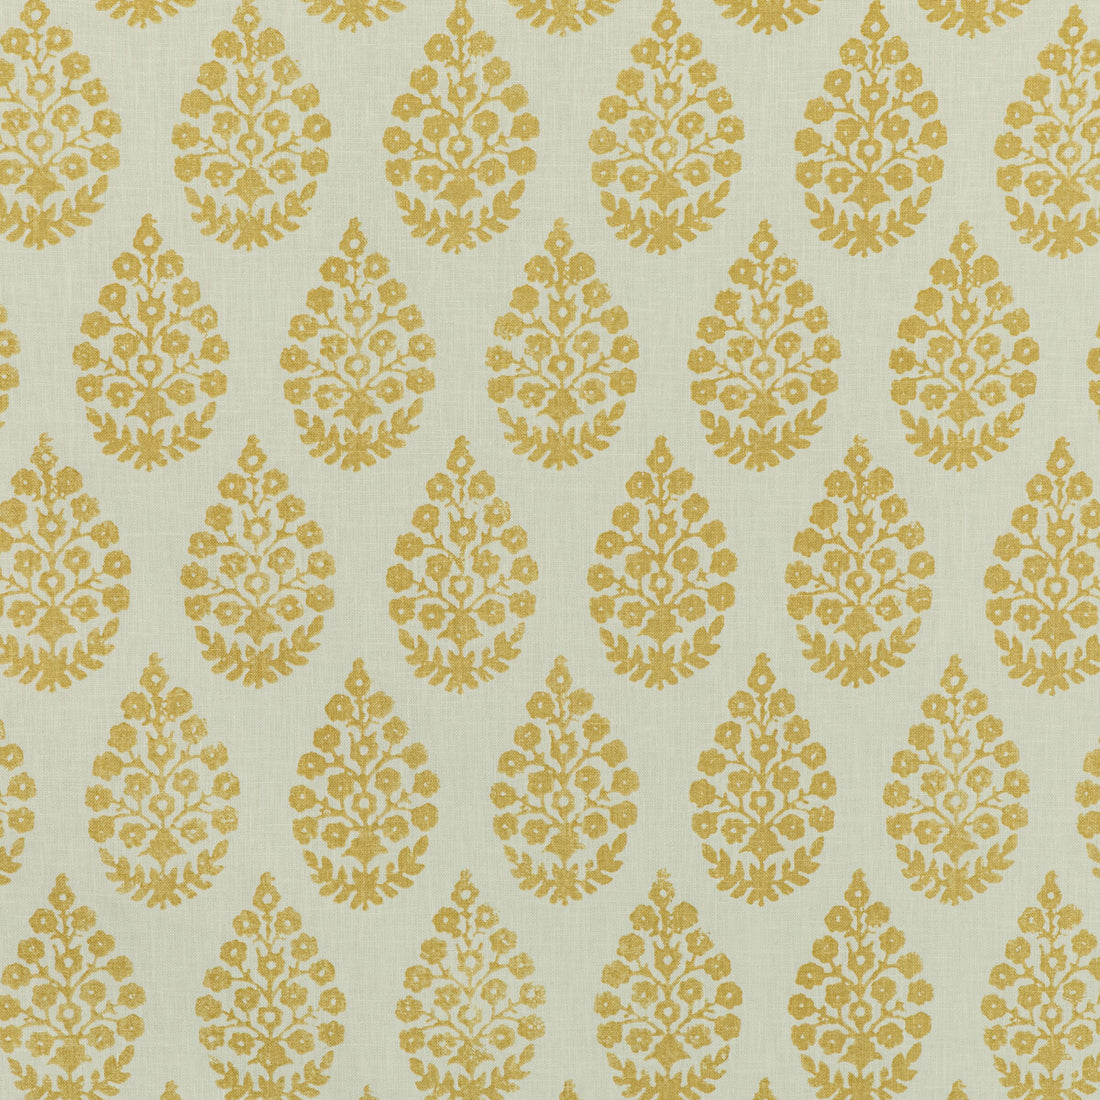 Kravet Basics fabric in tajpaisley-40 color - pattern TAJPAISLEY.40.0 - by Kravet Basics in the L&